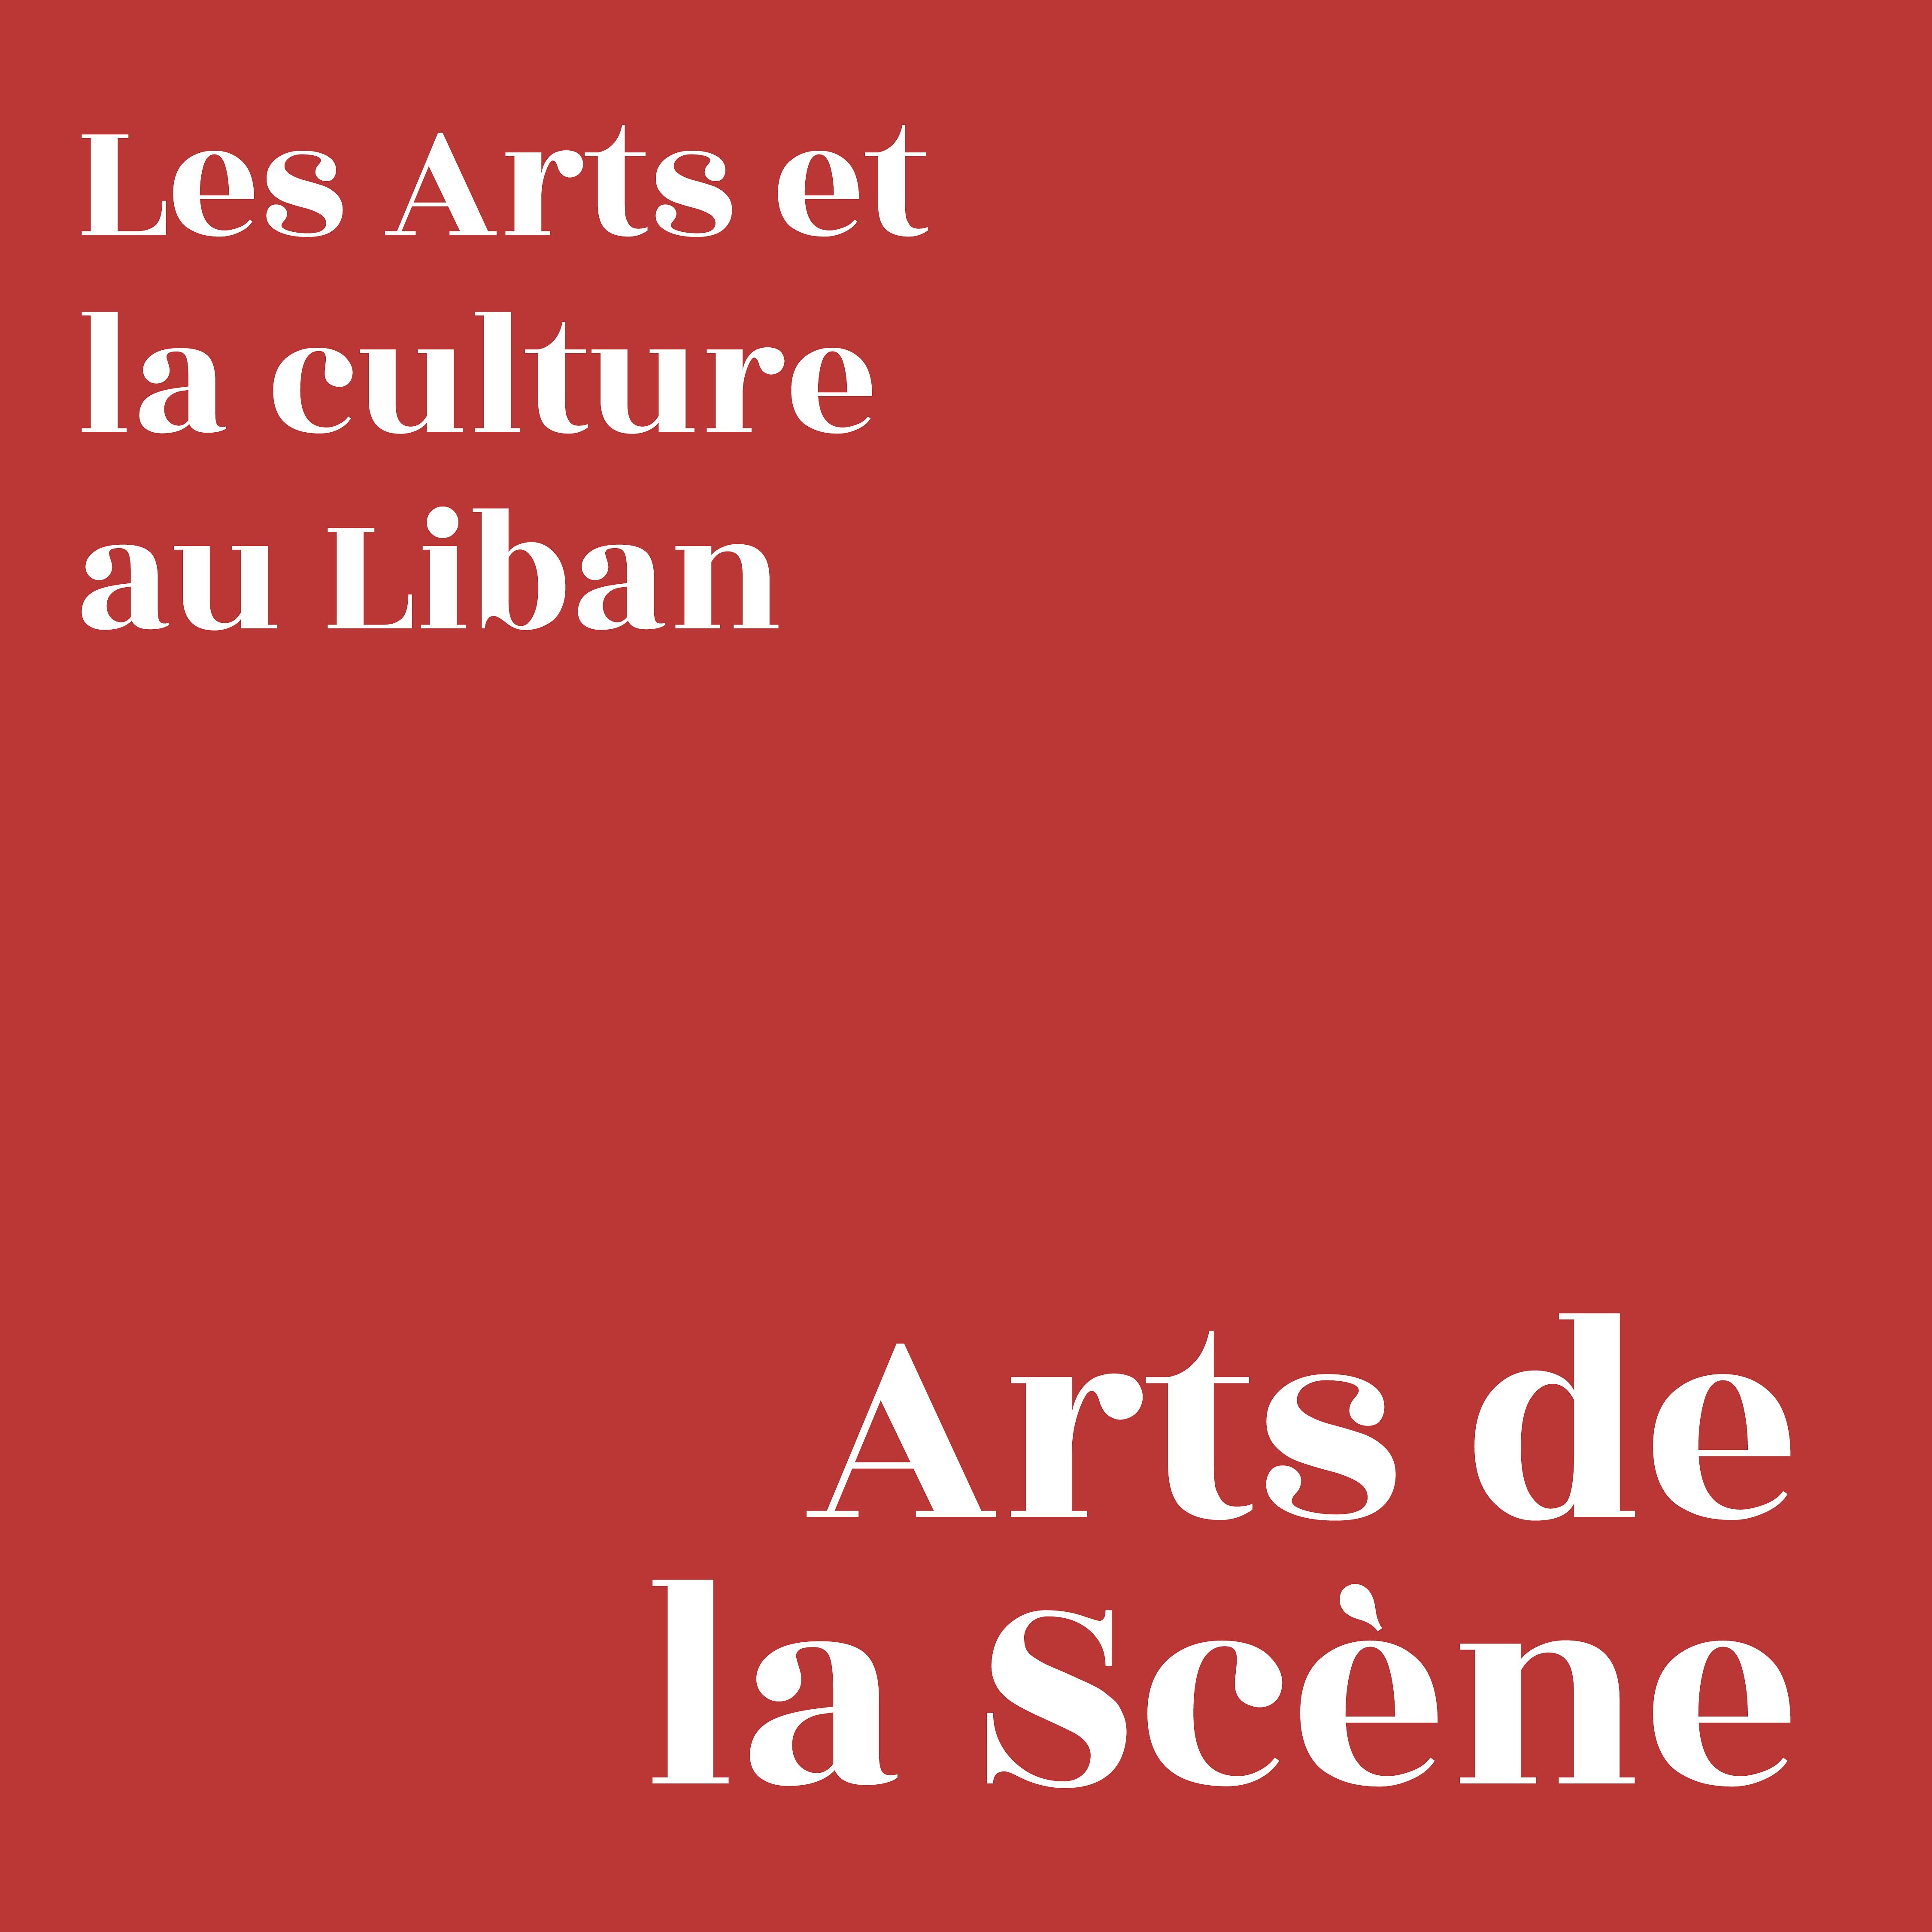 Les arts et la culture au Liban : Arts de la scène thumbnail